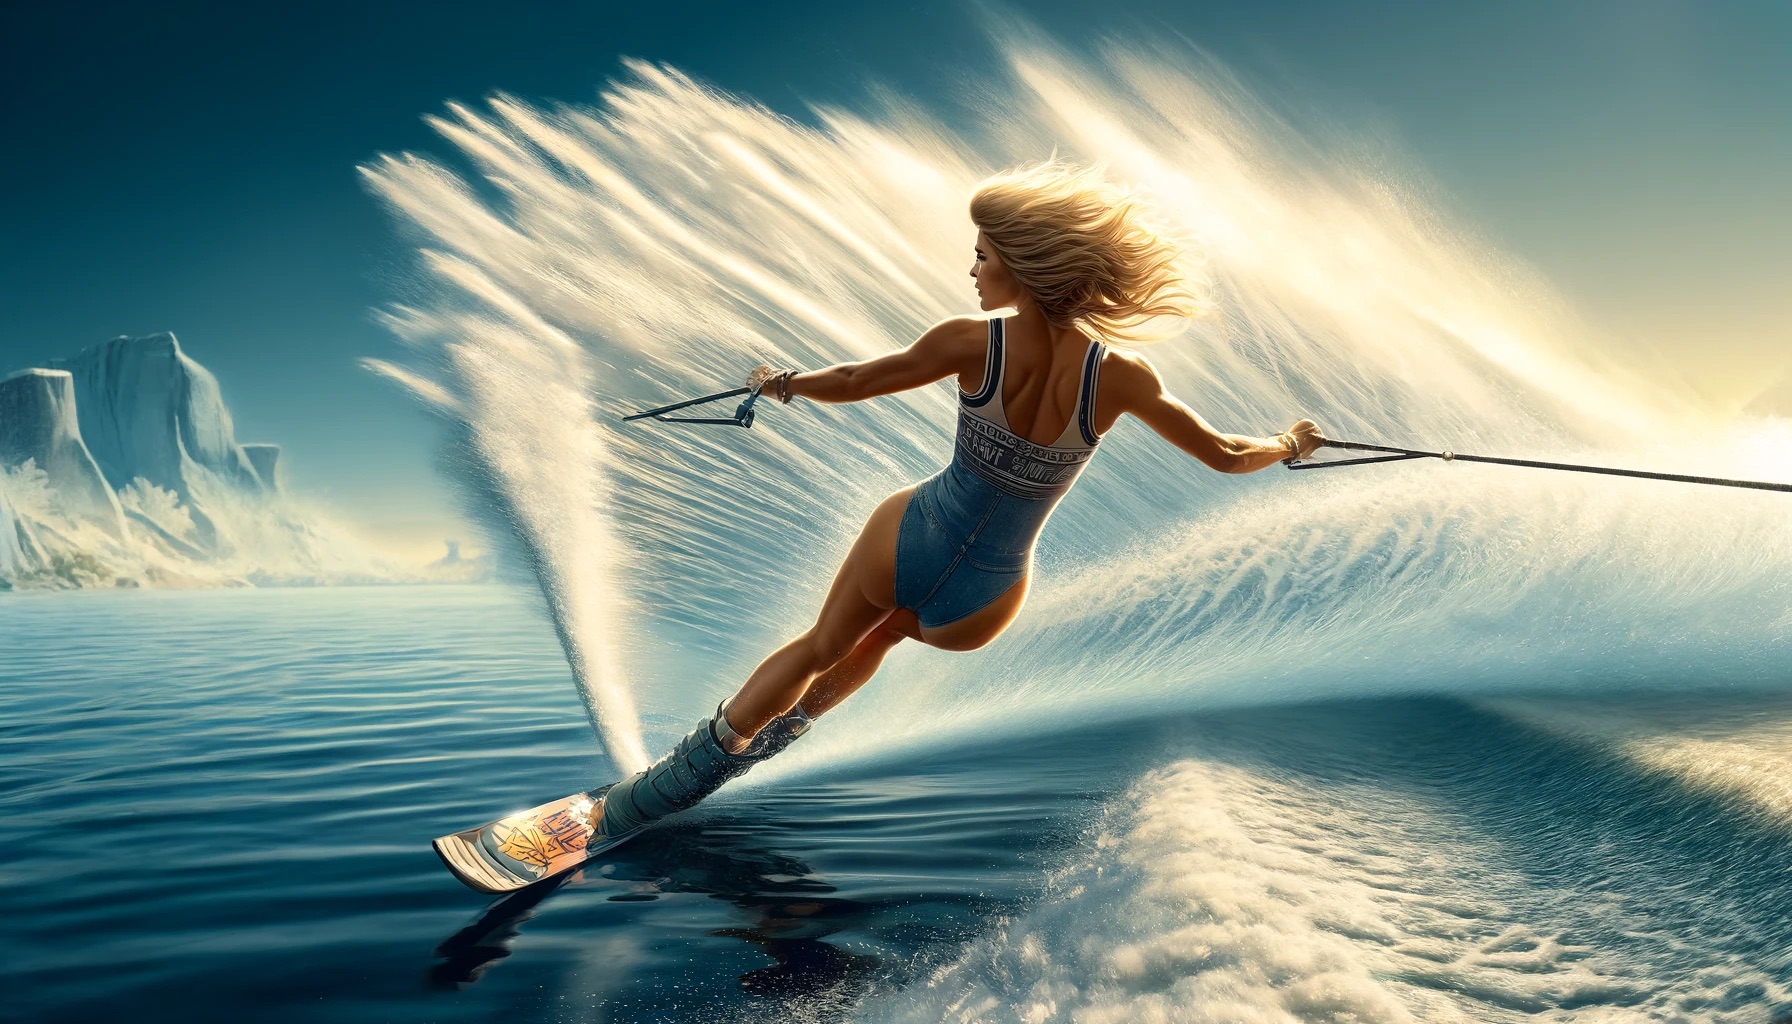 Kathy Fields water skiing on a single ski